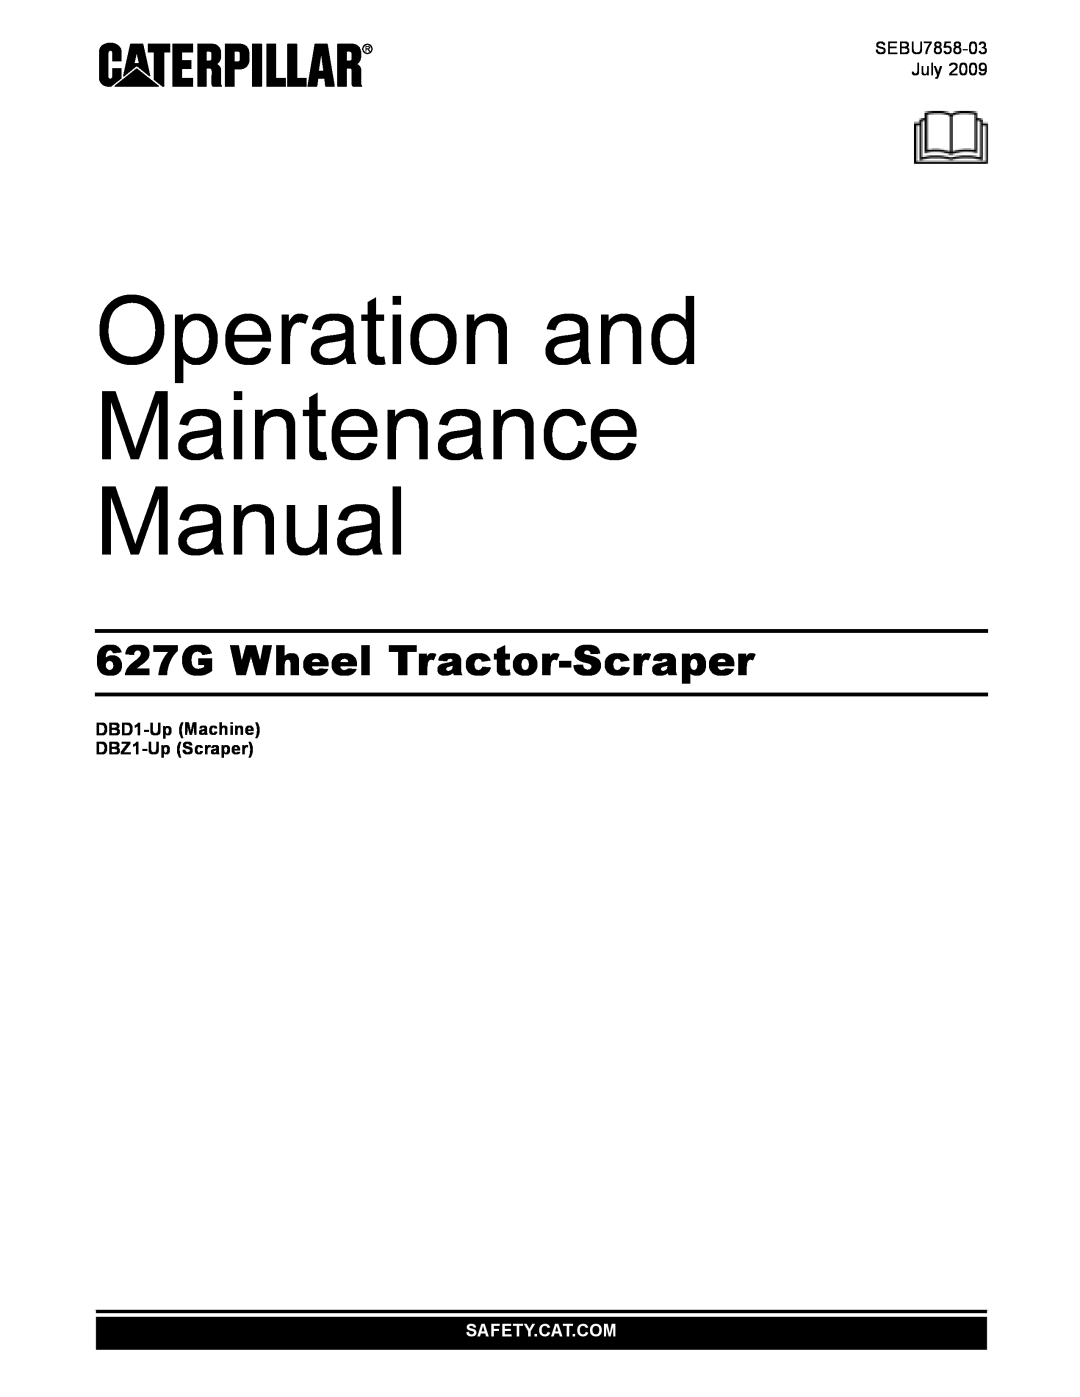 CAT manual Operation and Maintenance Manual, 627G Wheel Tractor-Scraper 